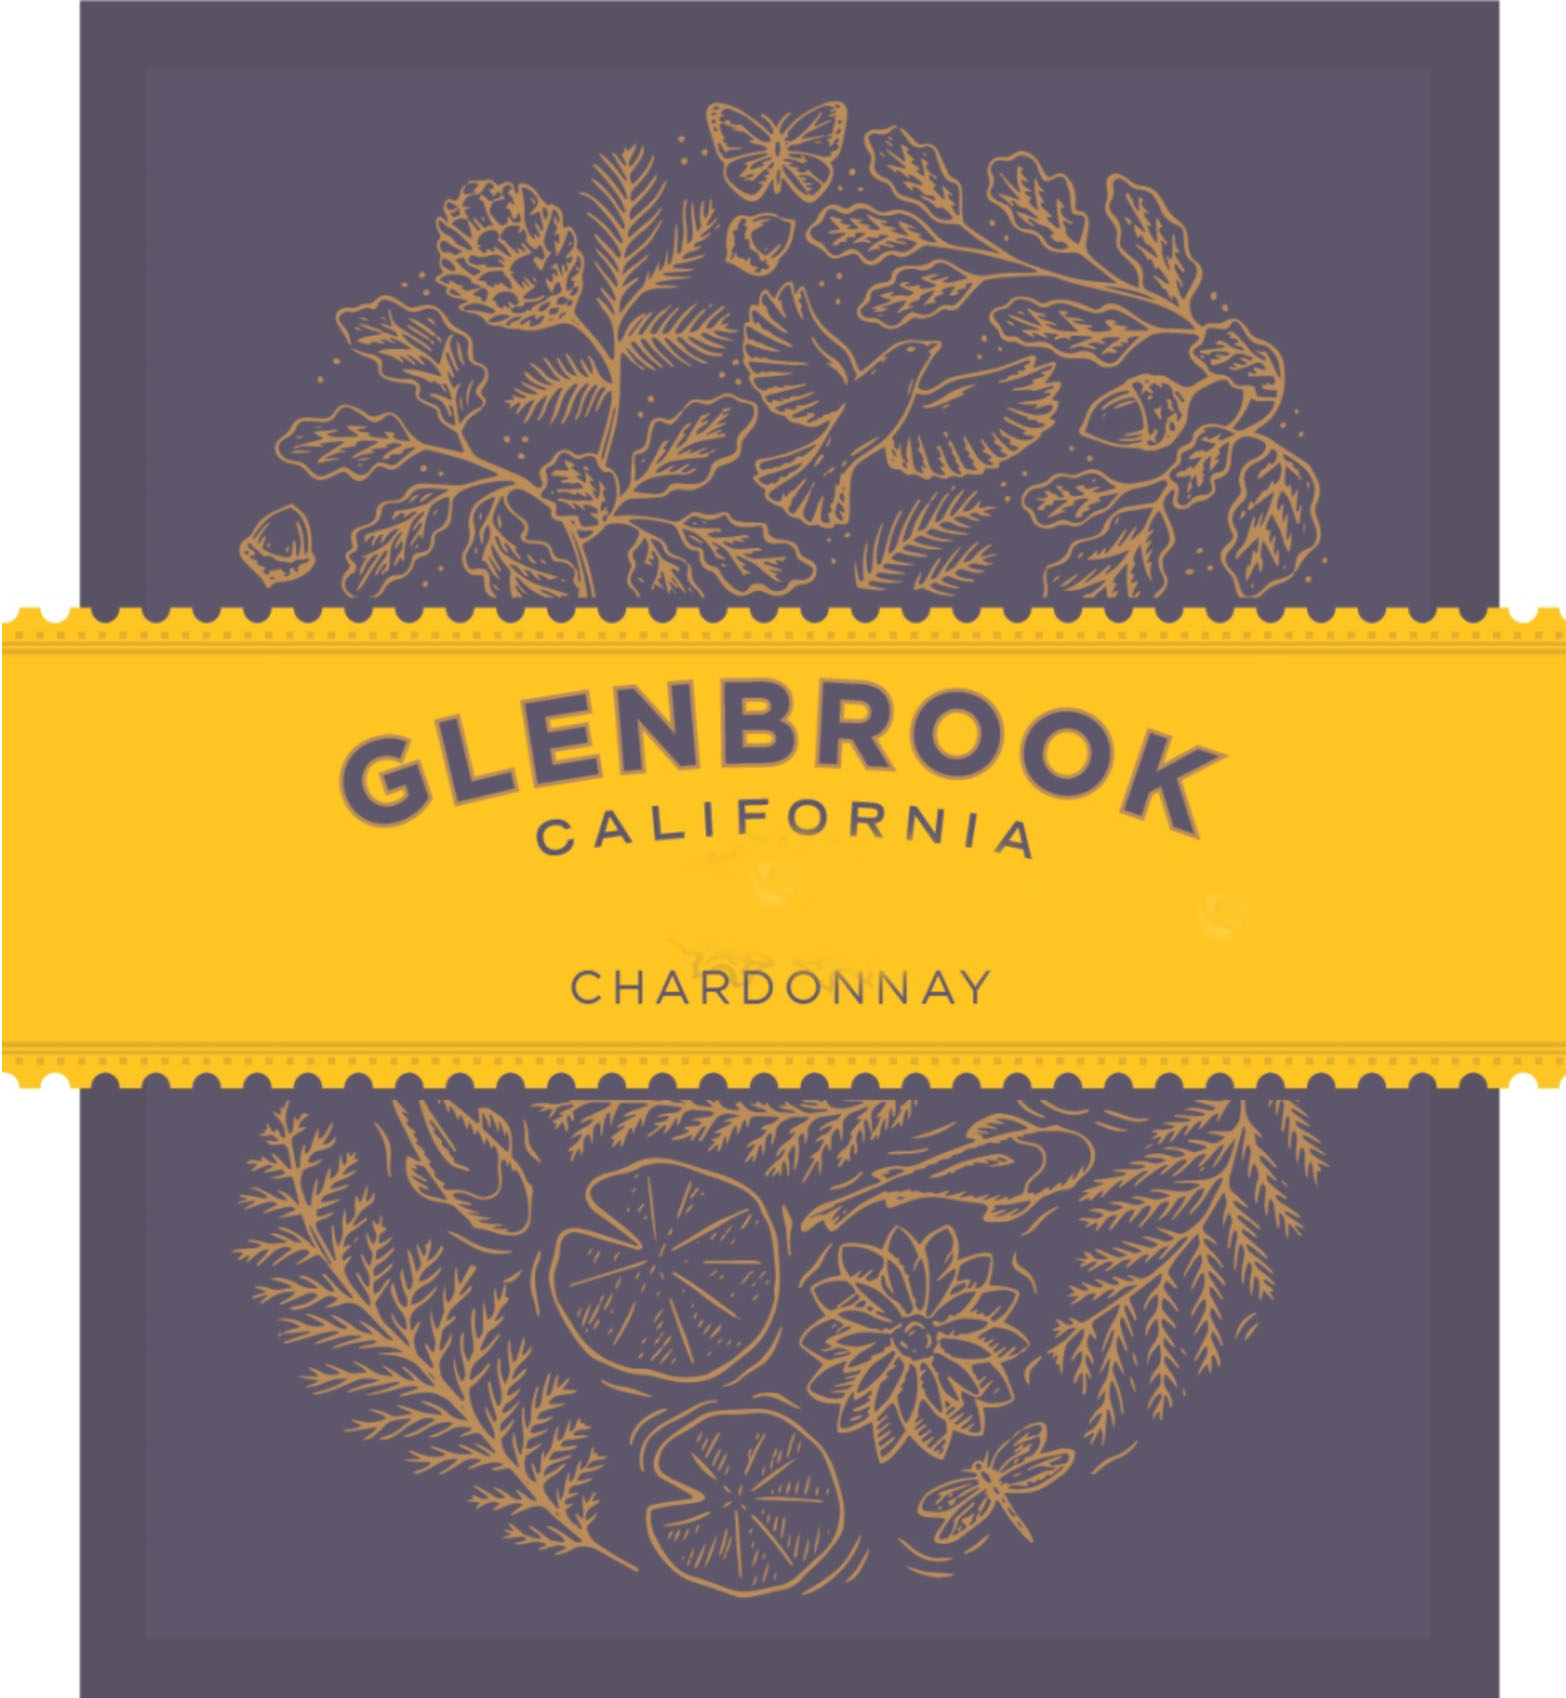 Glenbrook - Chardonnay label